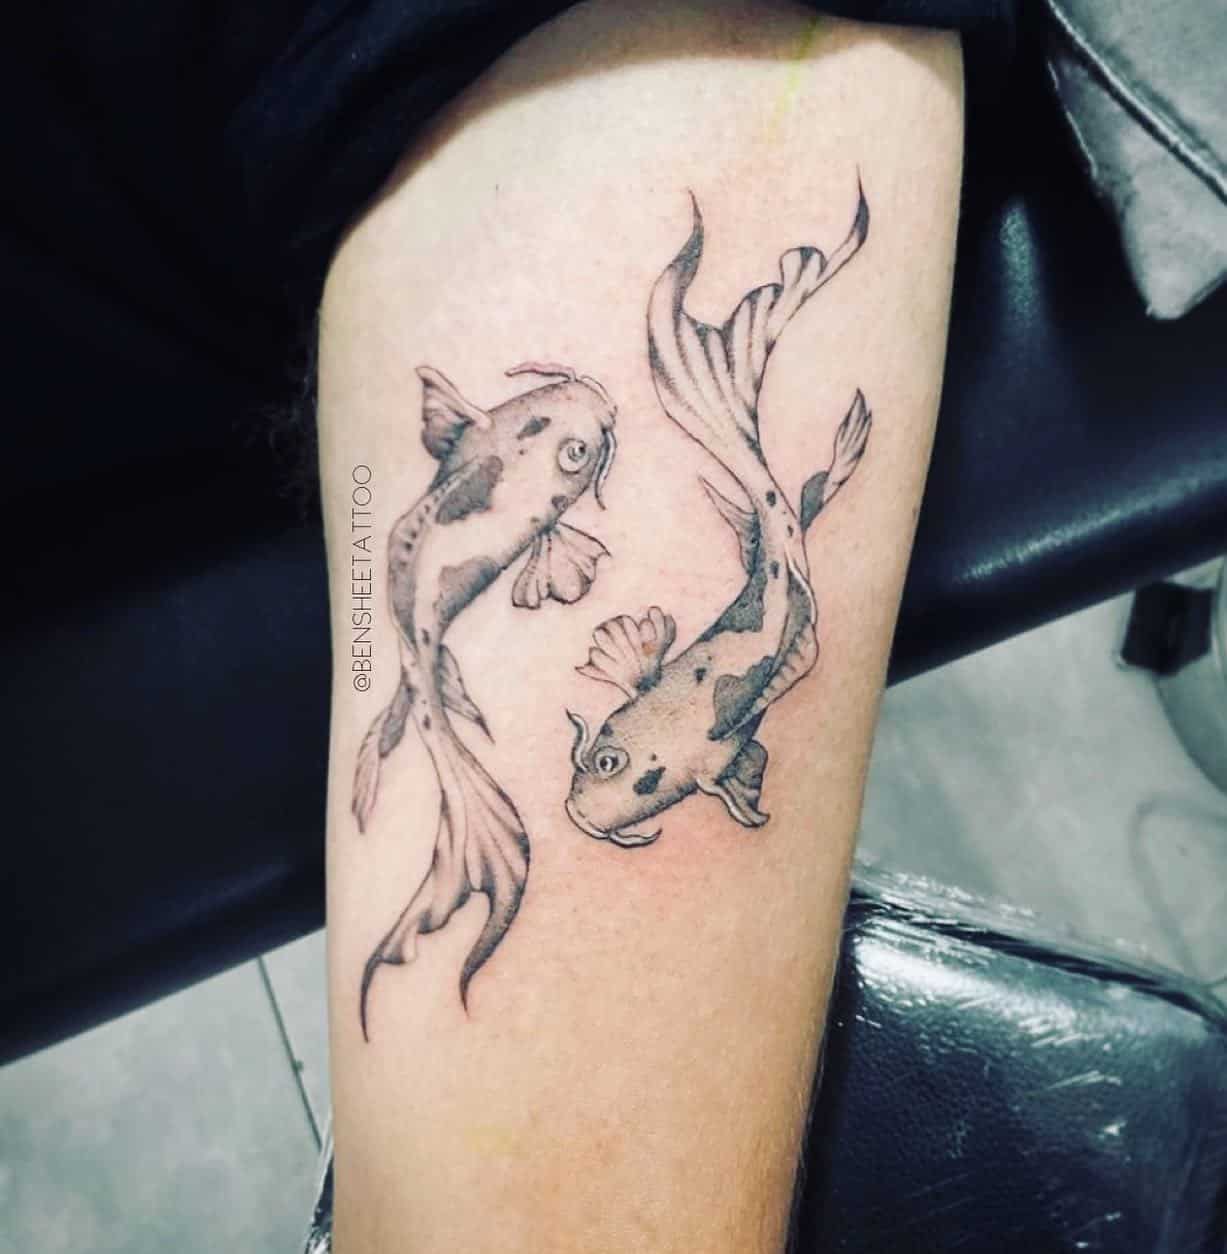 Tattoos depicting the Japanese Koi fish